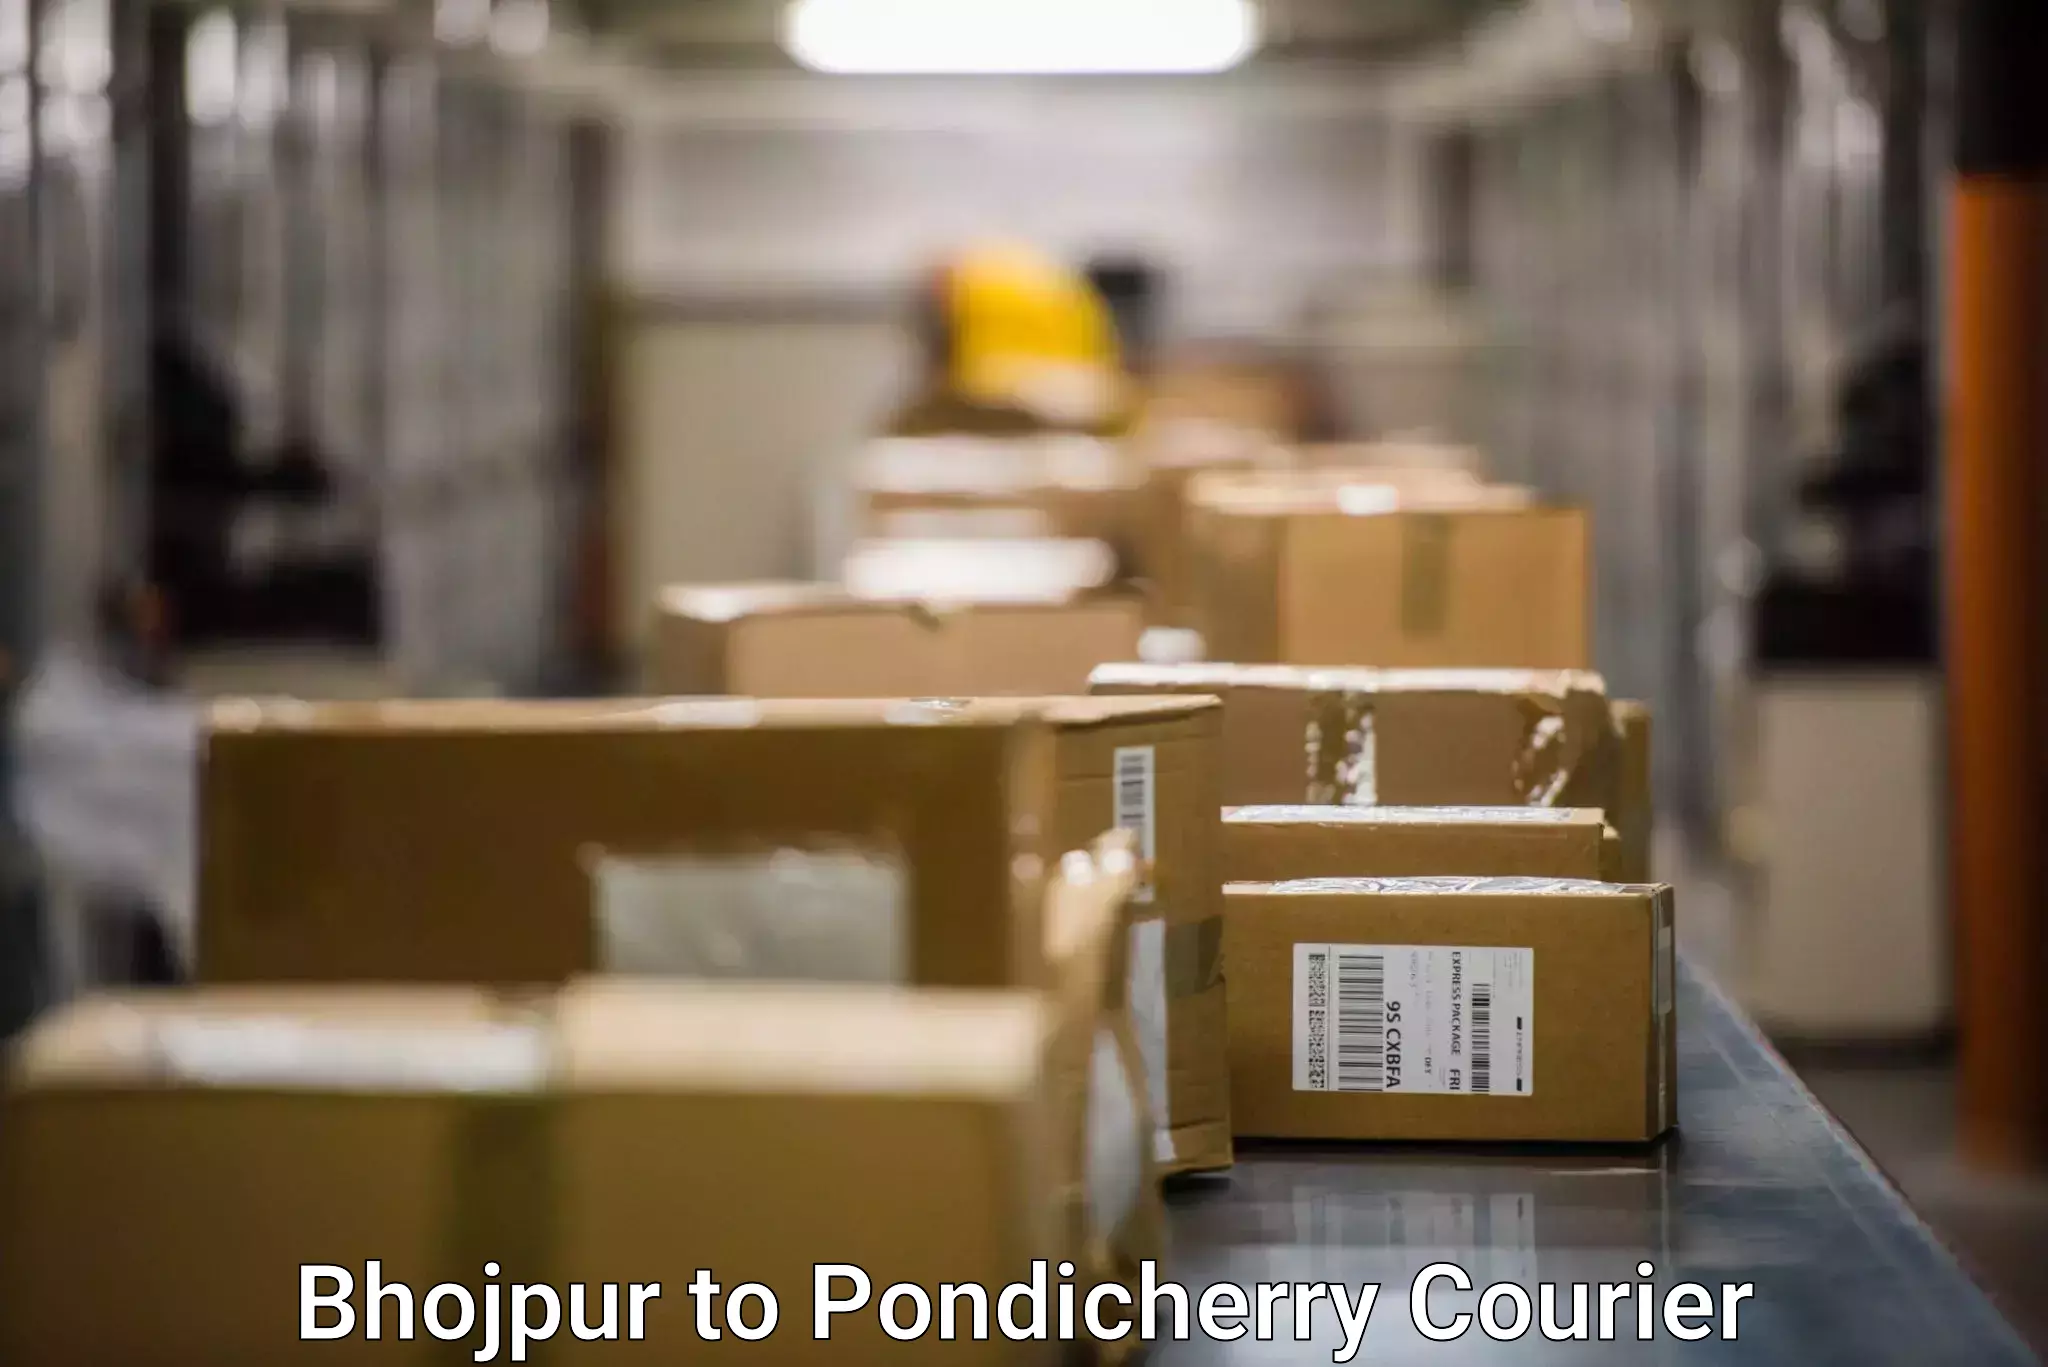 Courier service comparison Bhojpur to Pondicherry University